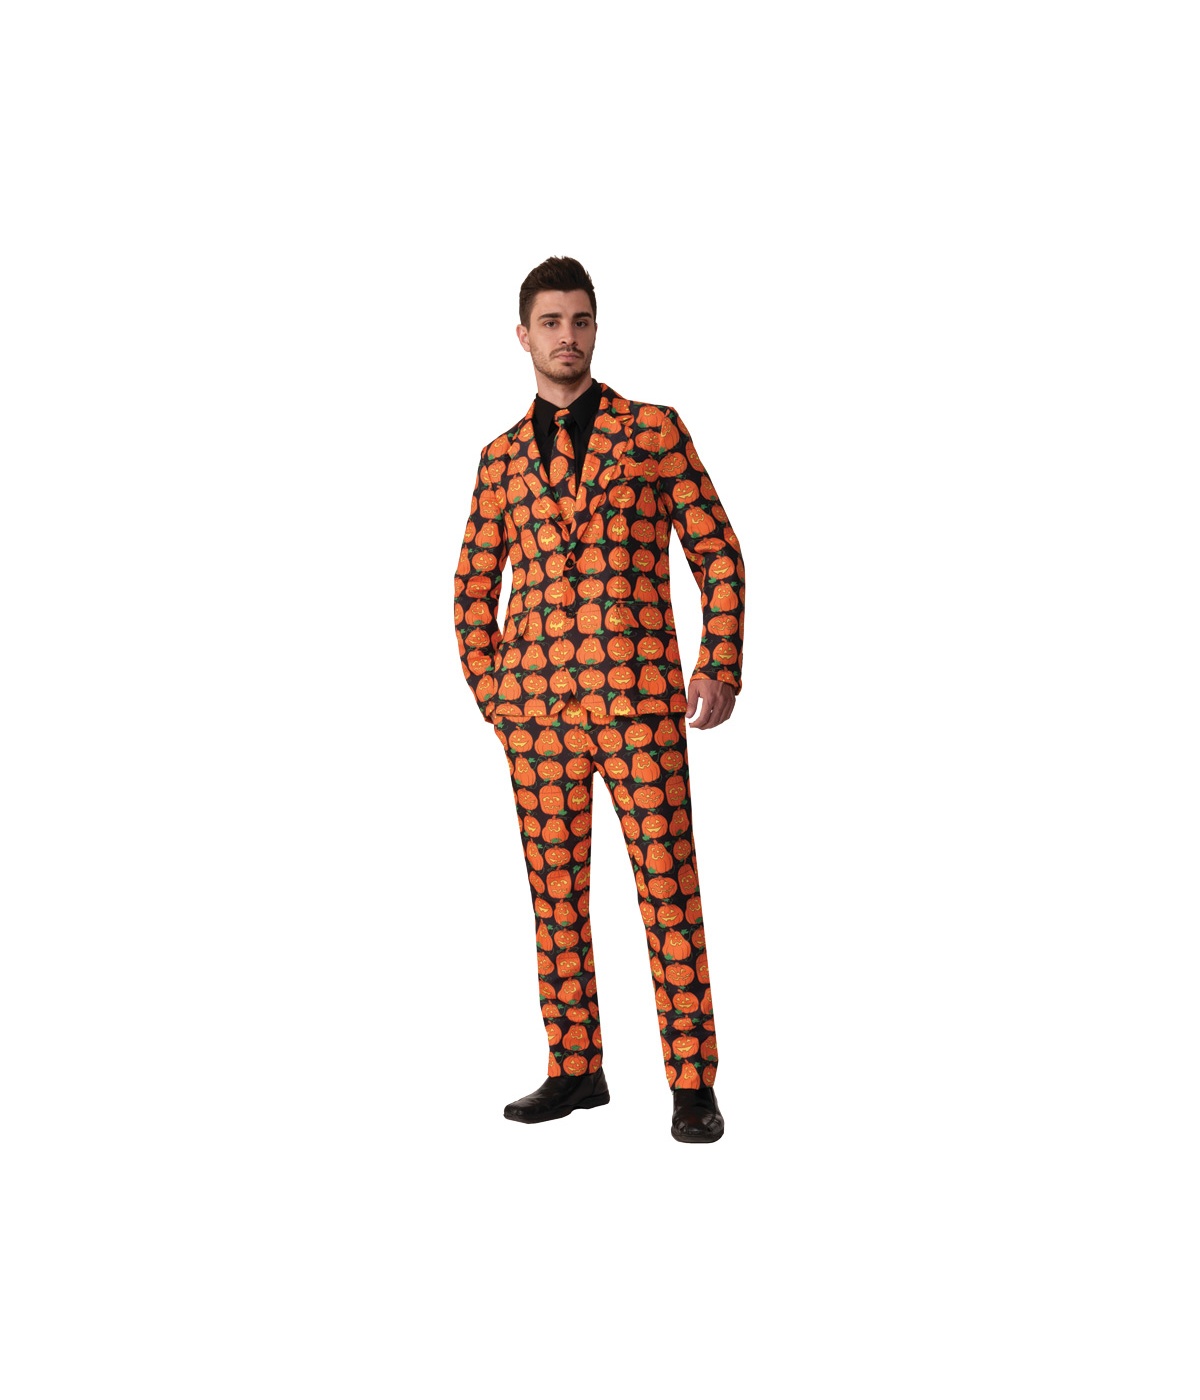  Pumpkin Print Suit Costume